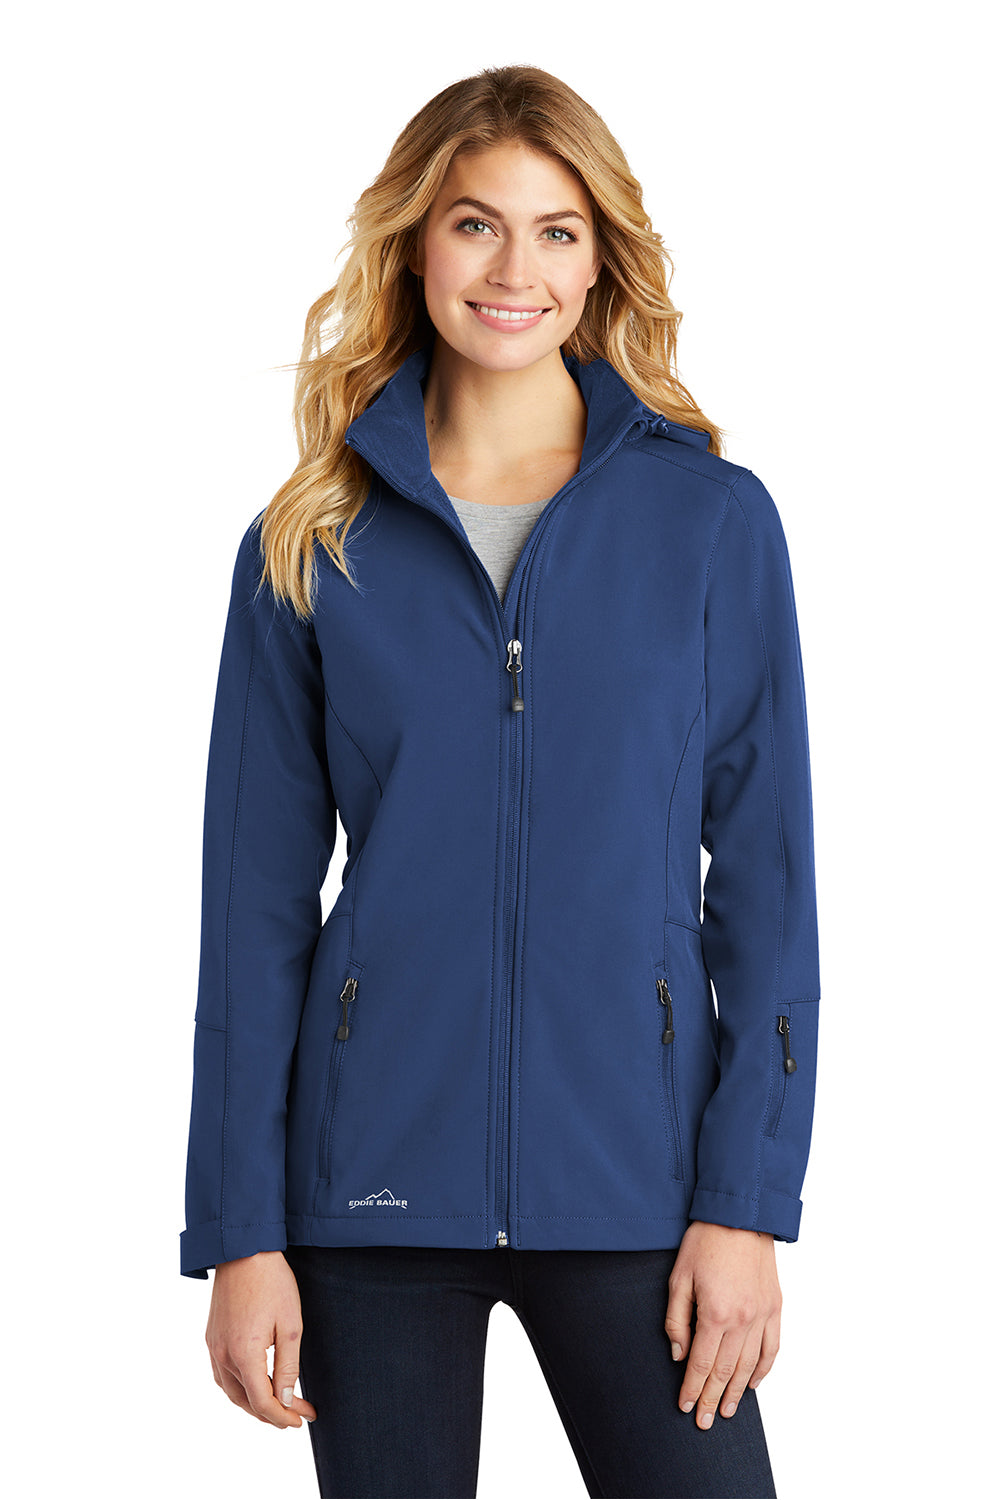 Eddie Bauer EB537 Womens Water Resistant Full Zip Hooded Jacket Admiral Blue Model Front